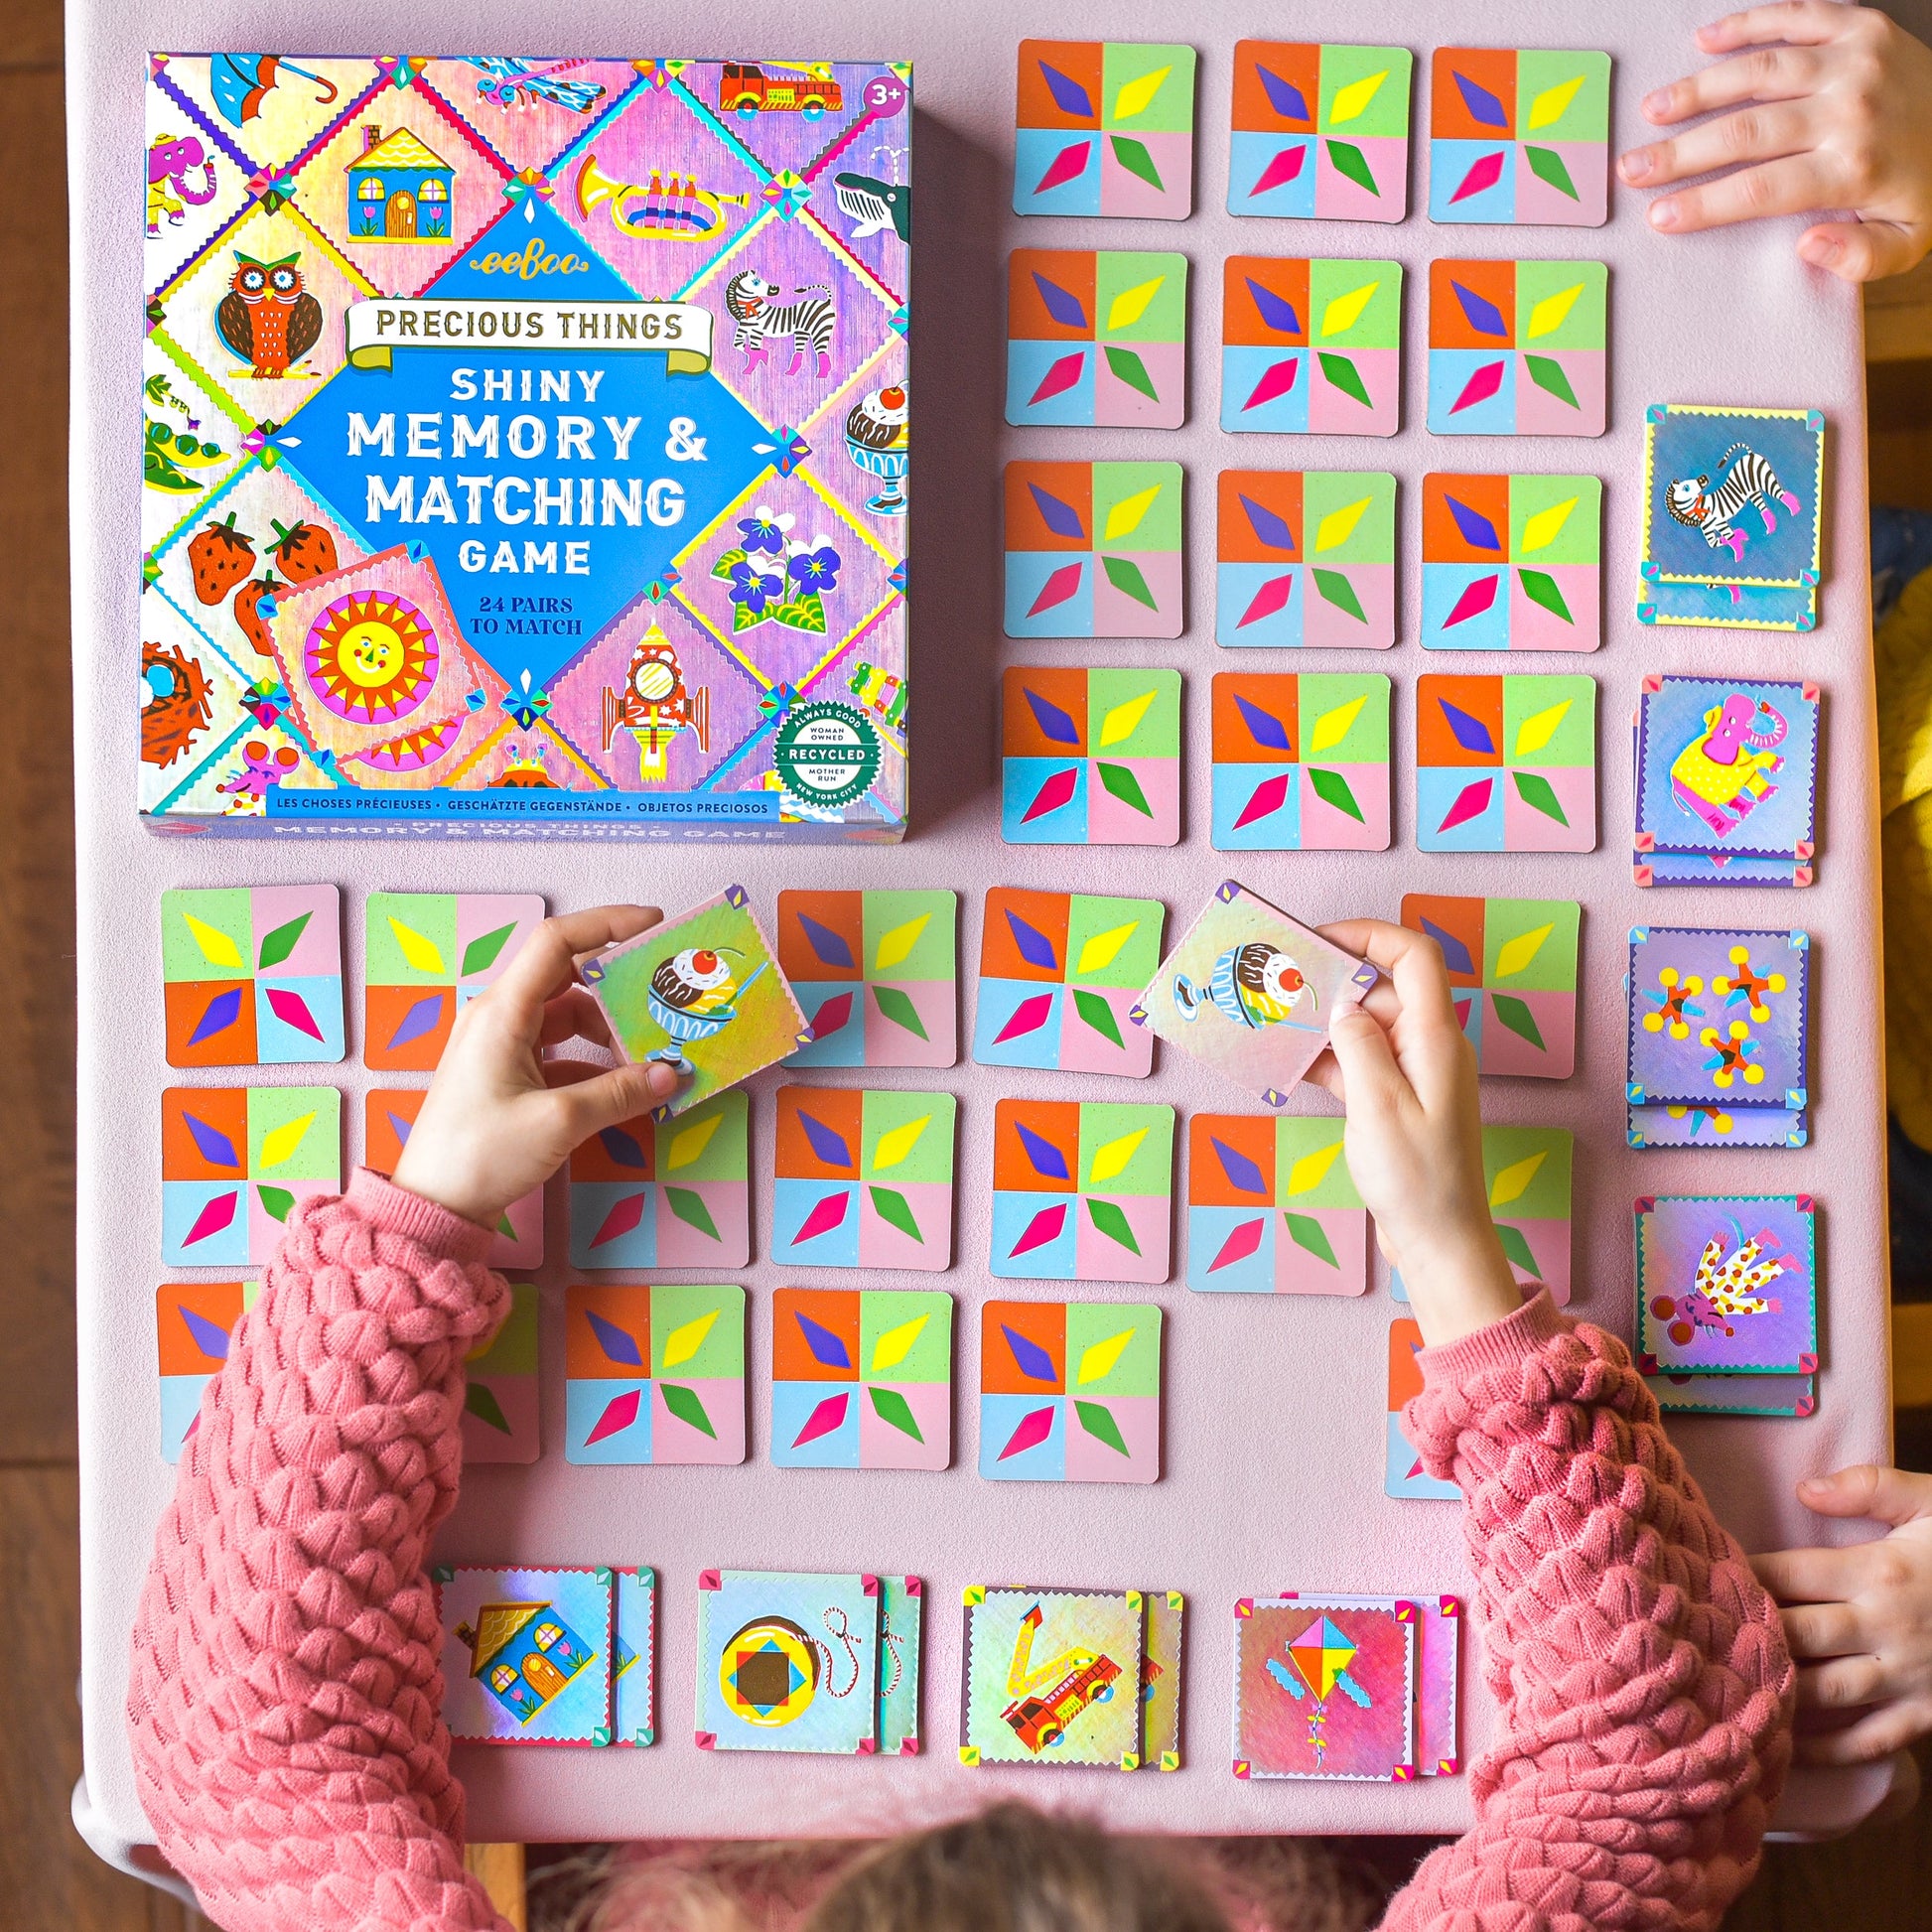 Precious Things Memory & Matching Game | eeBoo Gifts for Kindergartner Kids 5+ | Builds Basic Skills